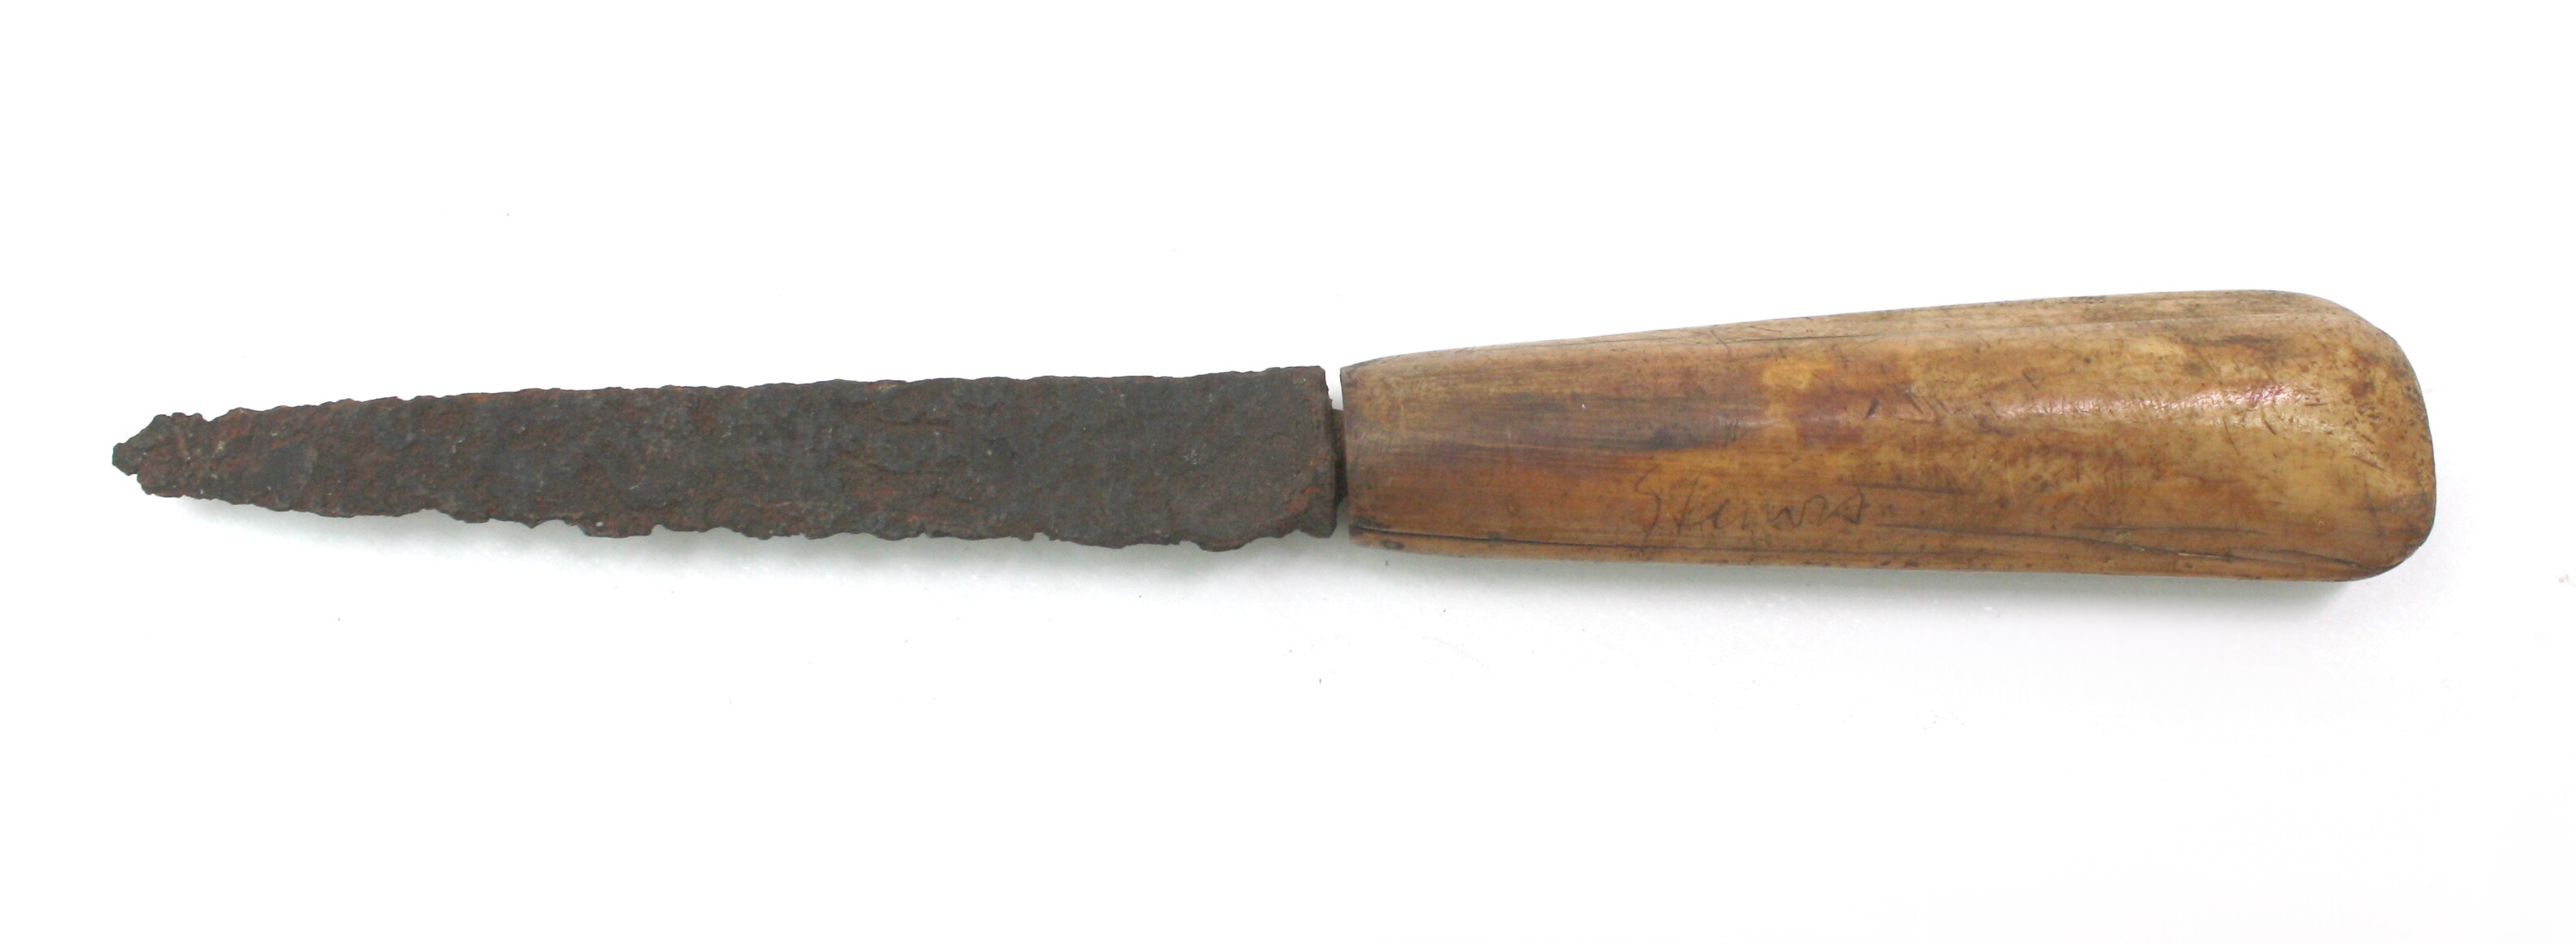 Messer mit Beingriff (Drilandmuseum CC BY-NC-SA)